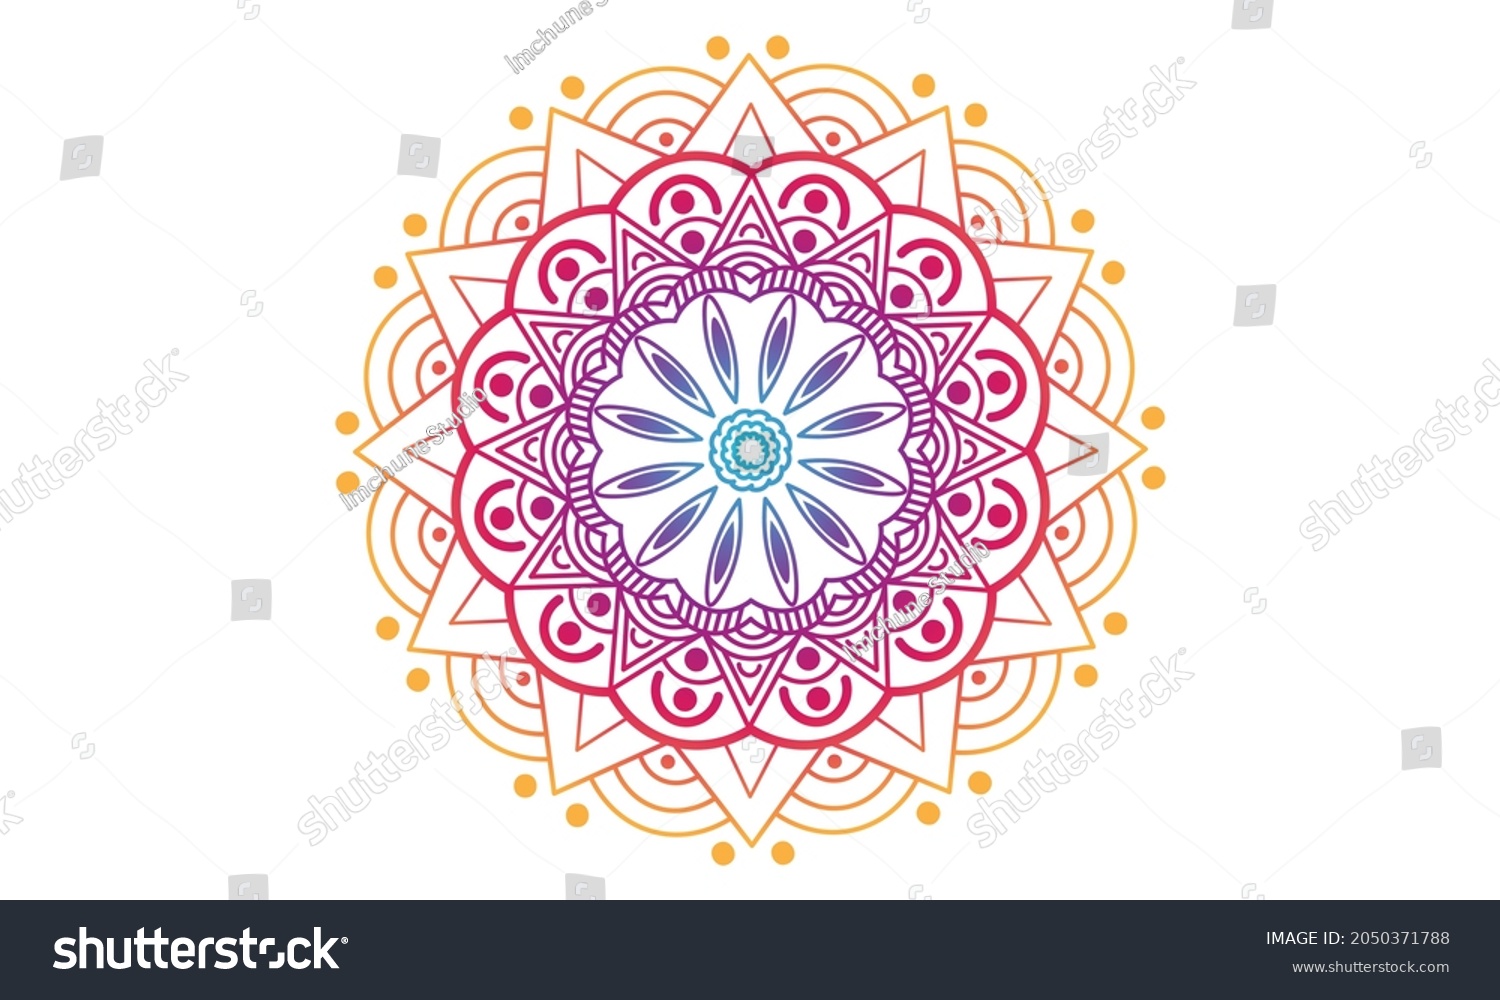 SVG of Vector Mandala Flower Ornament Design  svg